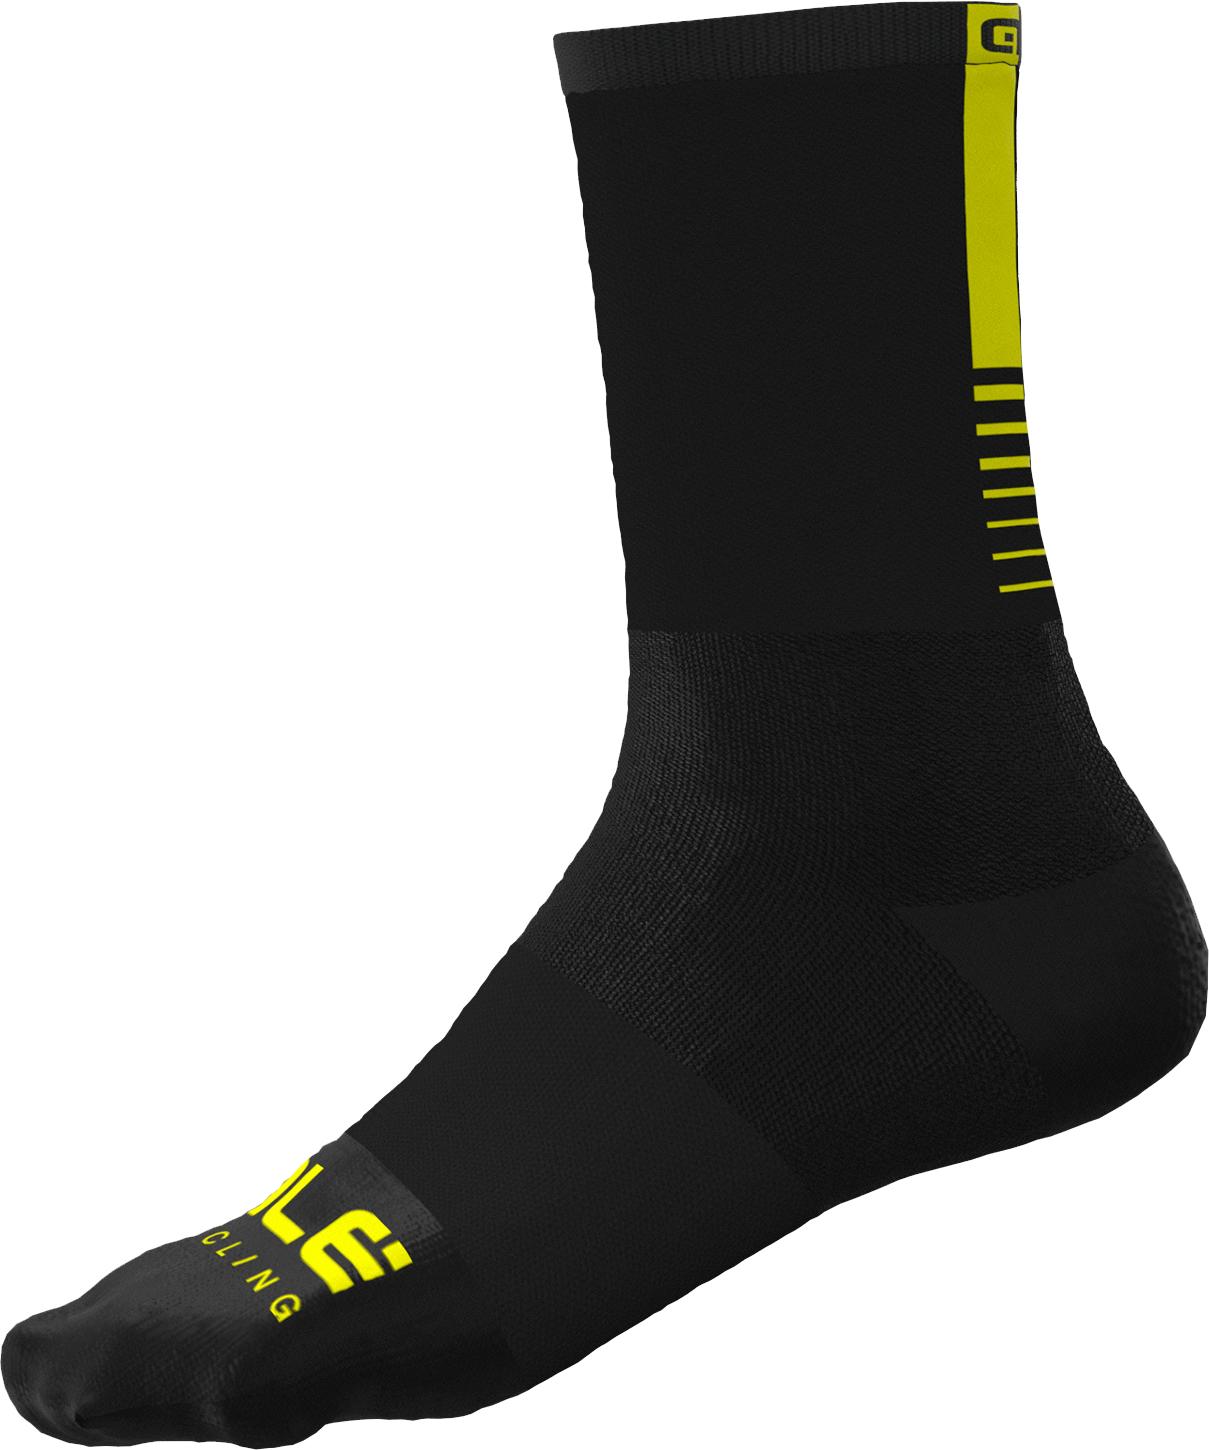 Al Light Cycling Socks - Black